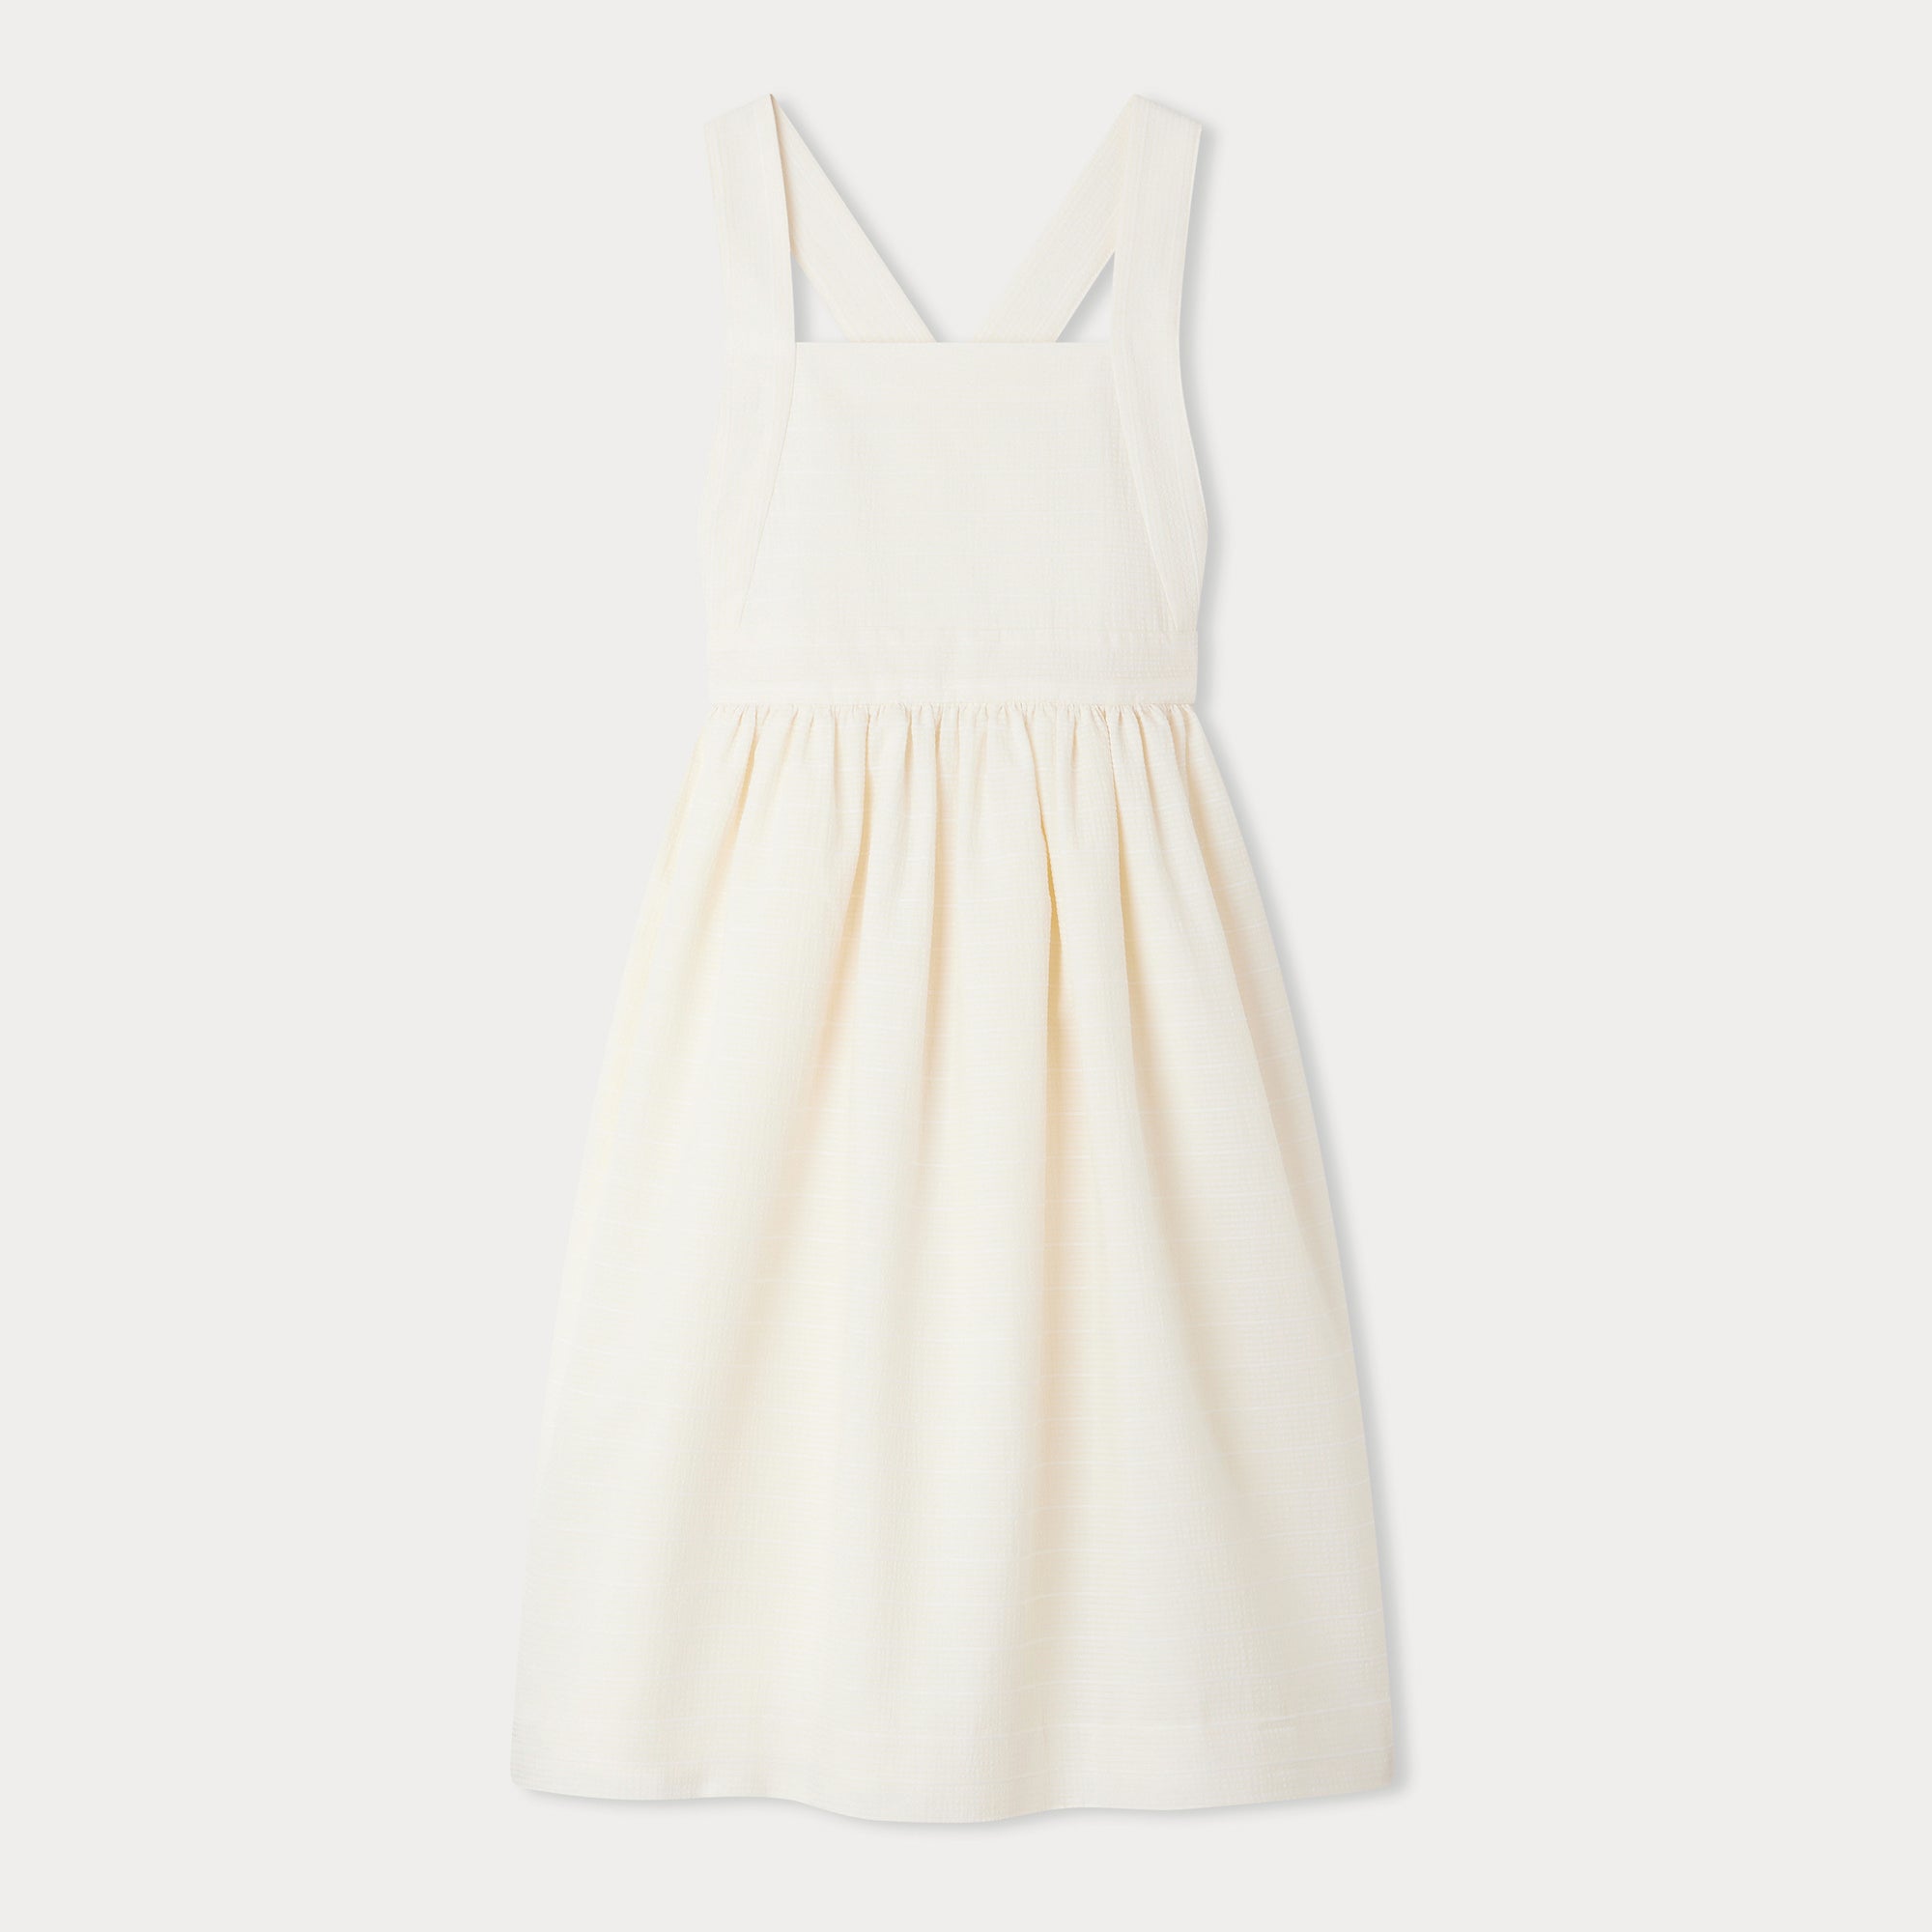 Girls White Cotton Dress